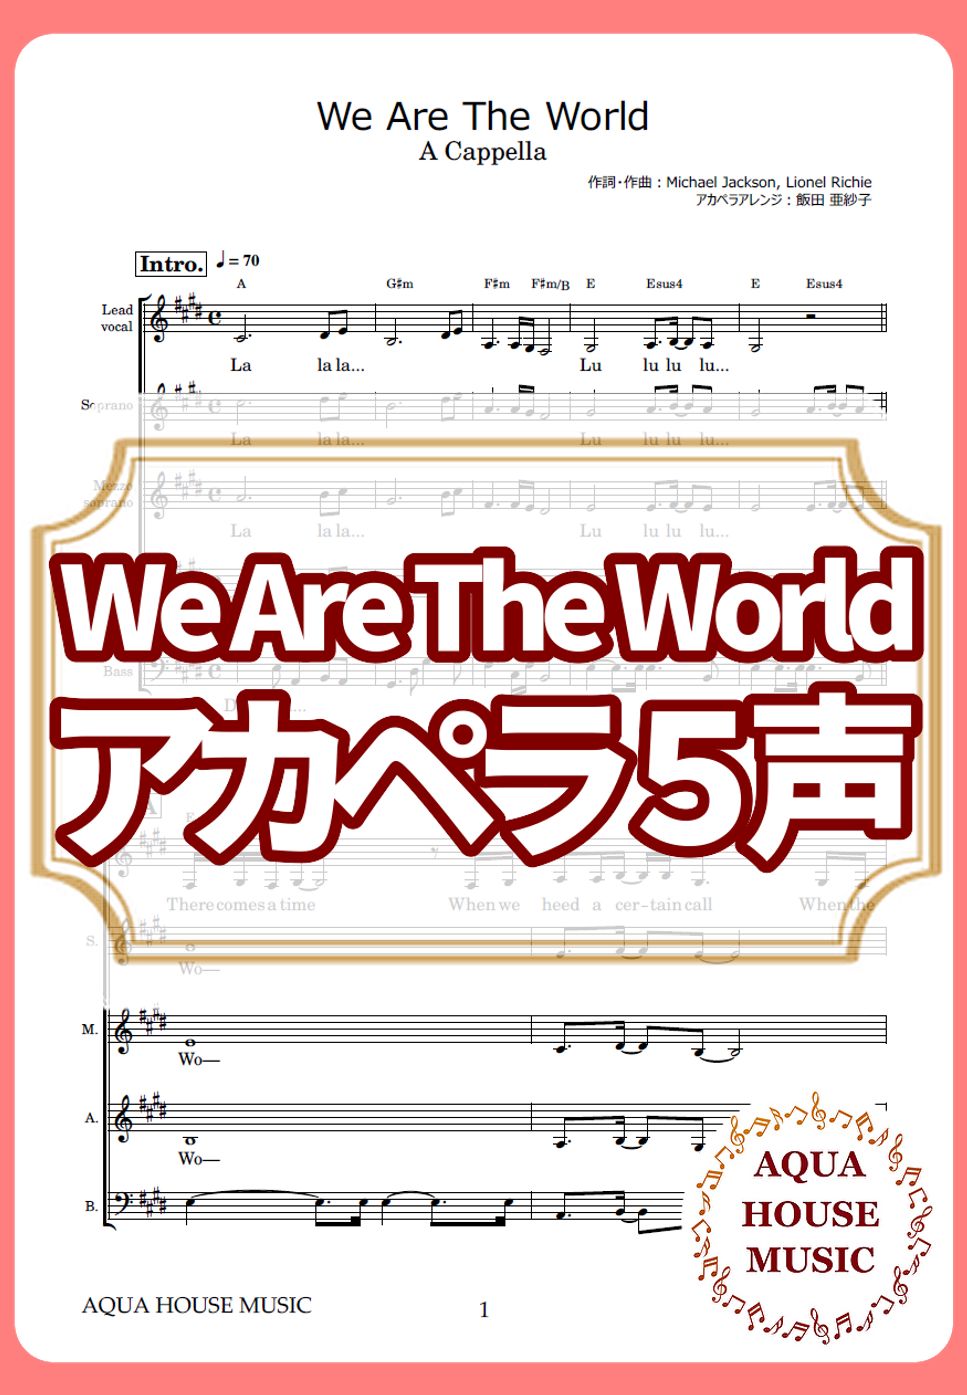 USA for Africa - We Are The World (アカペラ楽譜♪５声ボイパなし) by 飯田 亜紗子